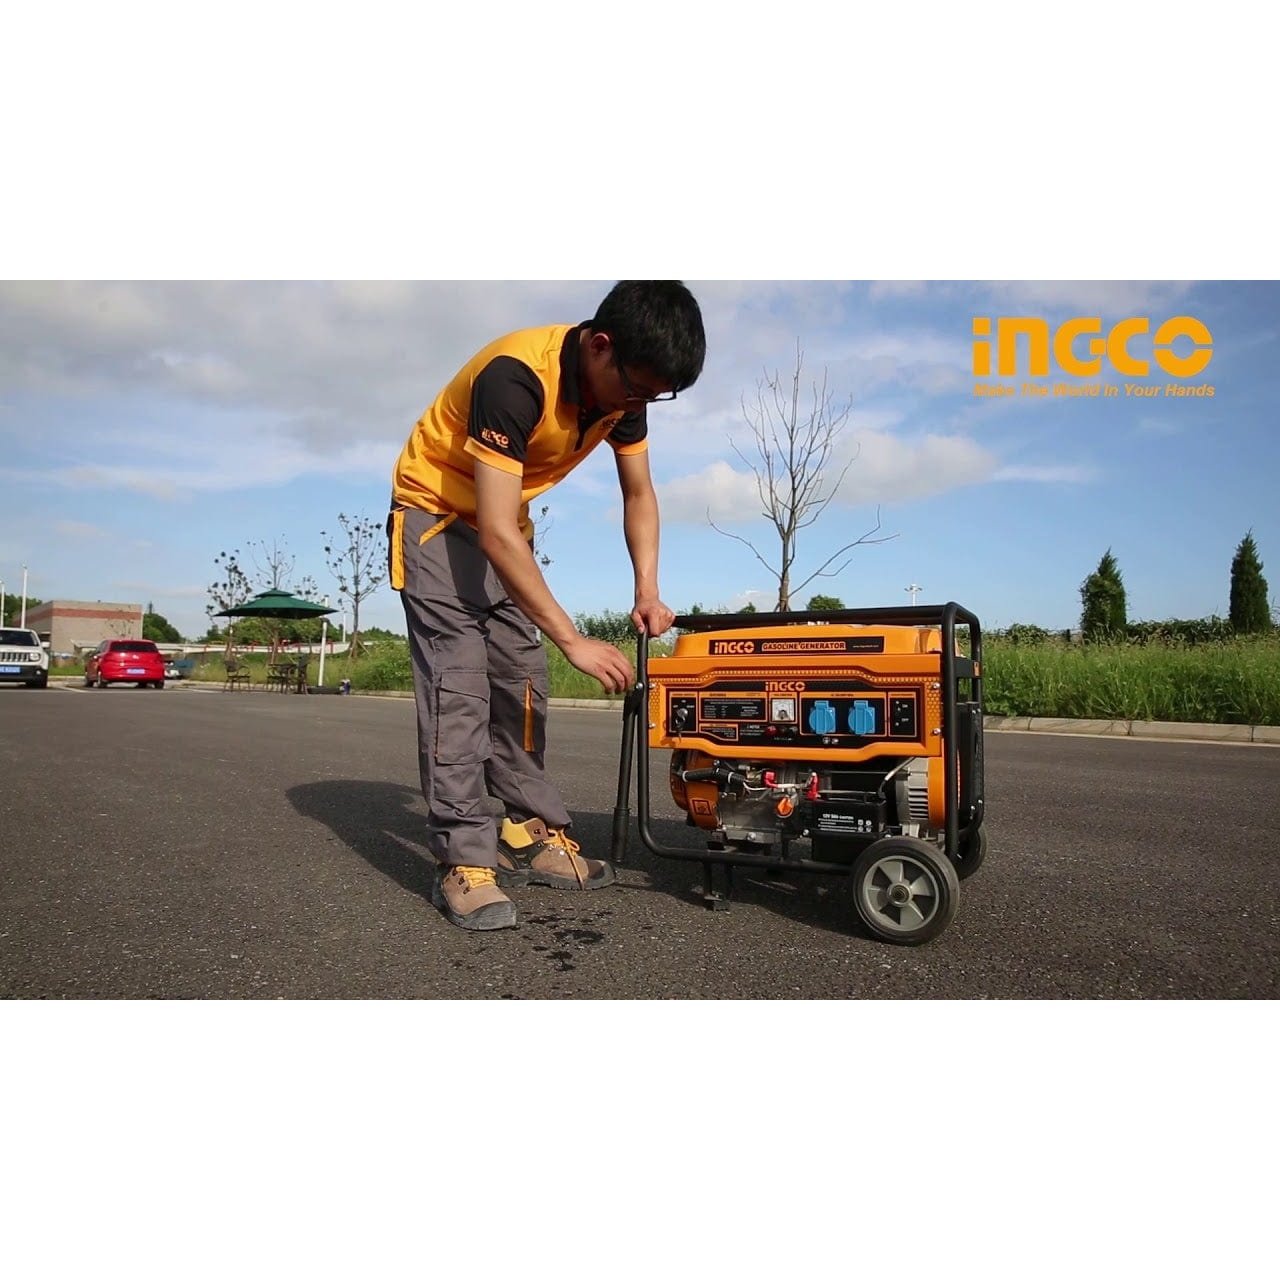 Ingco Gasoline Generator 5.5KW - GE55003 - Buy Online in Accra, Ghana at Supply Master Generator Buy Tools hardware Building materials